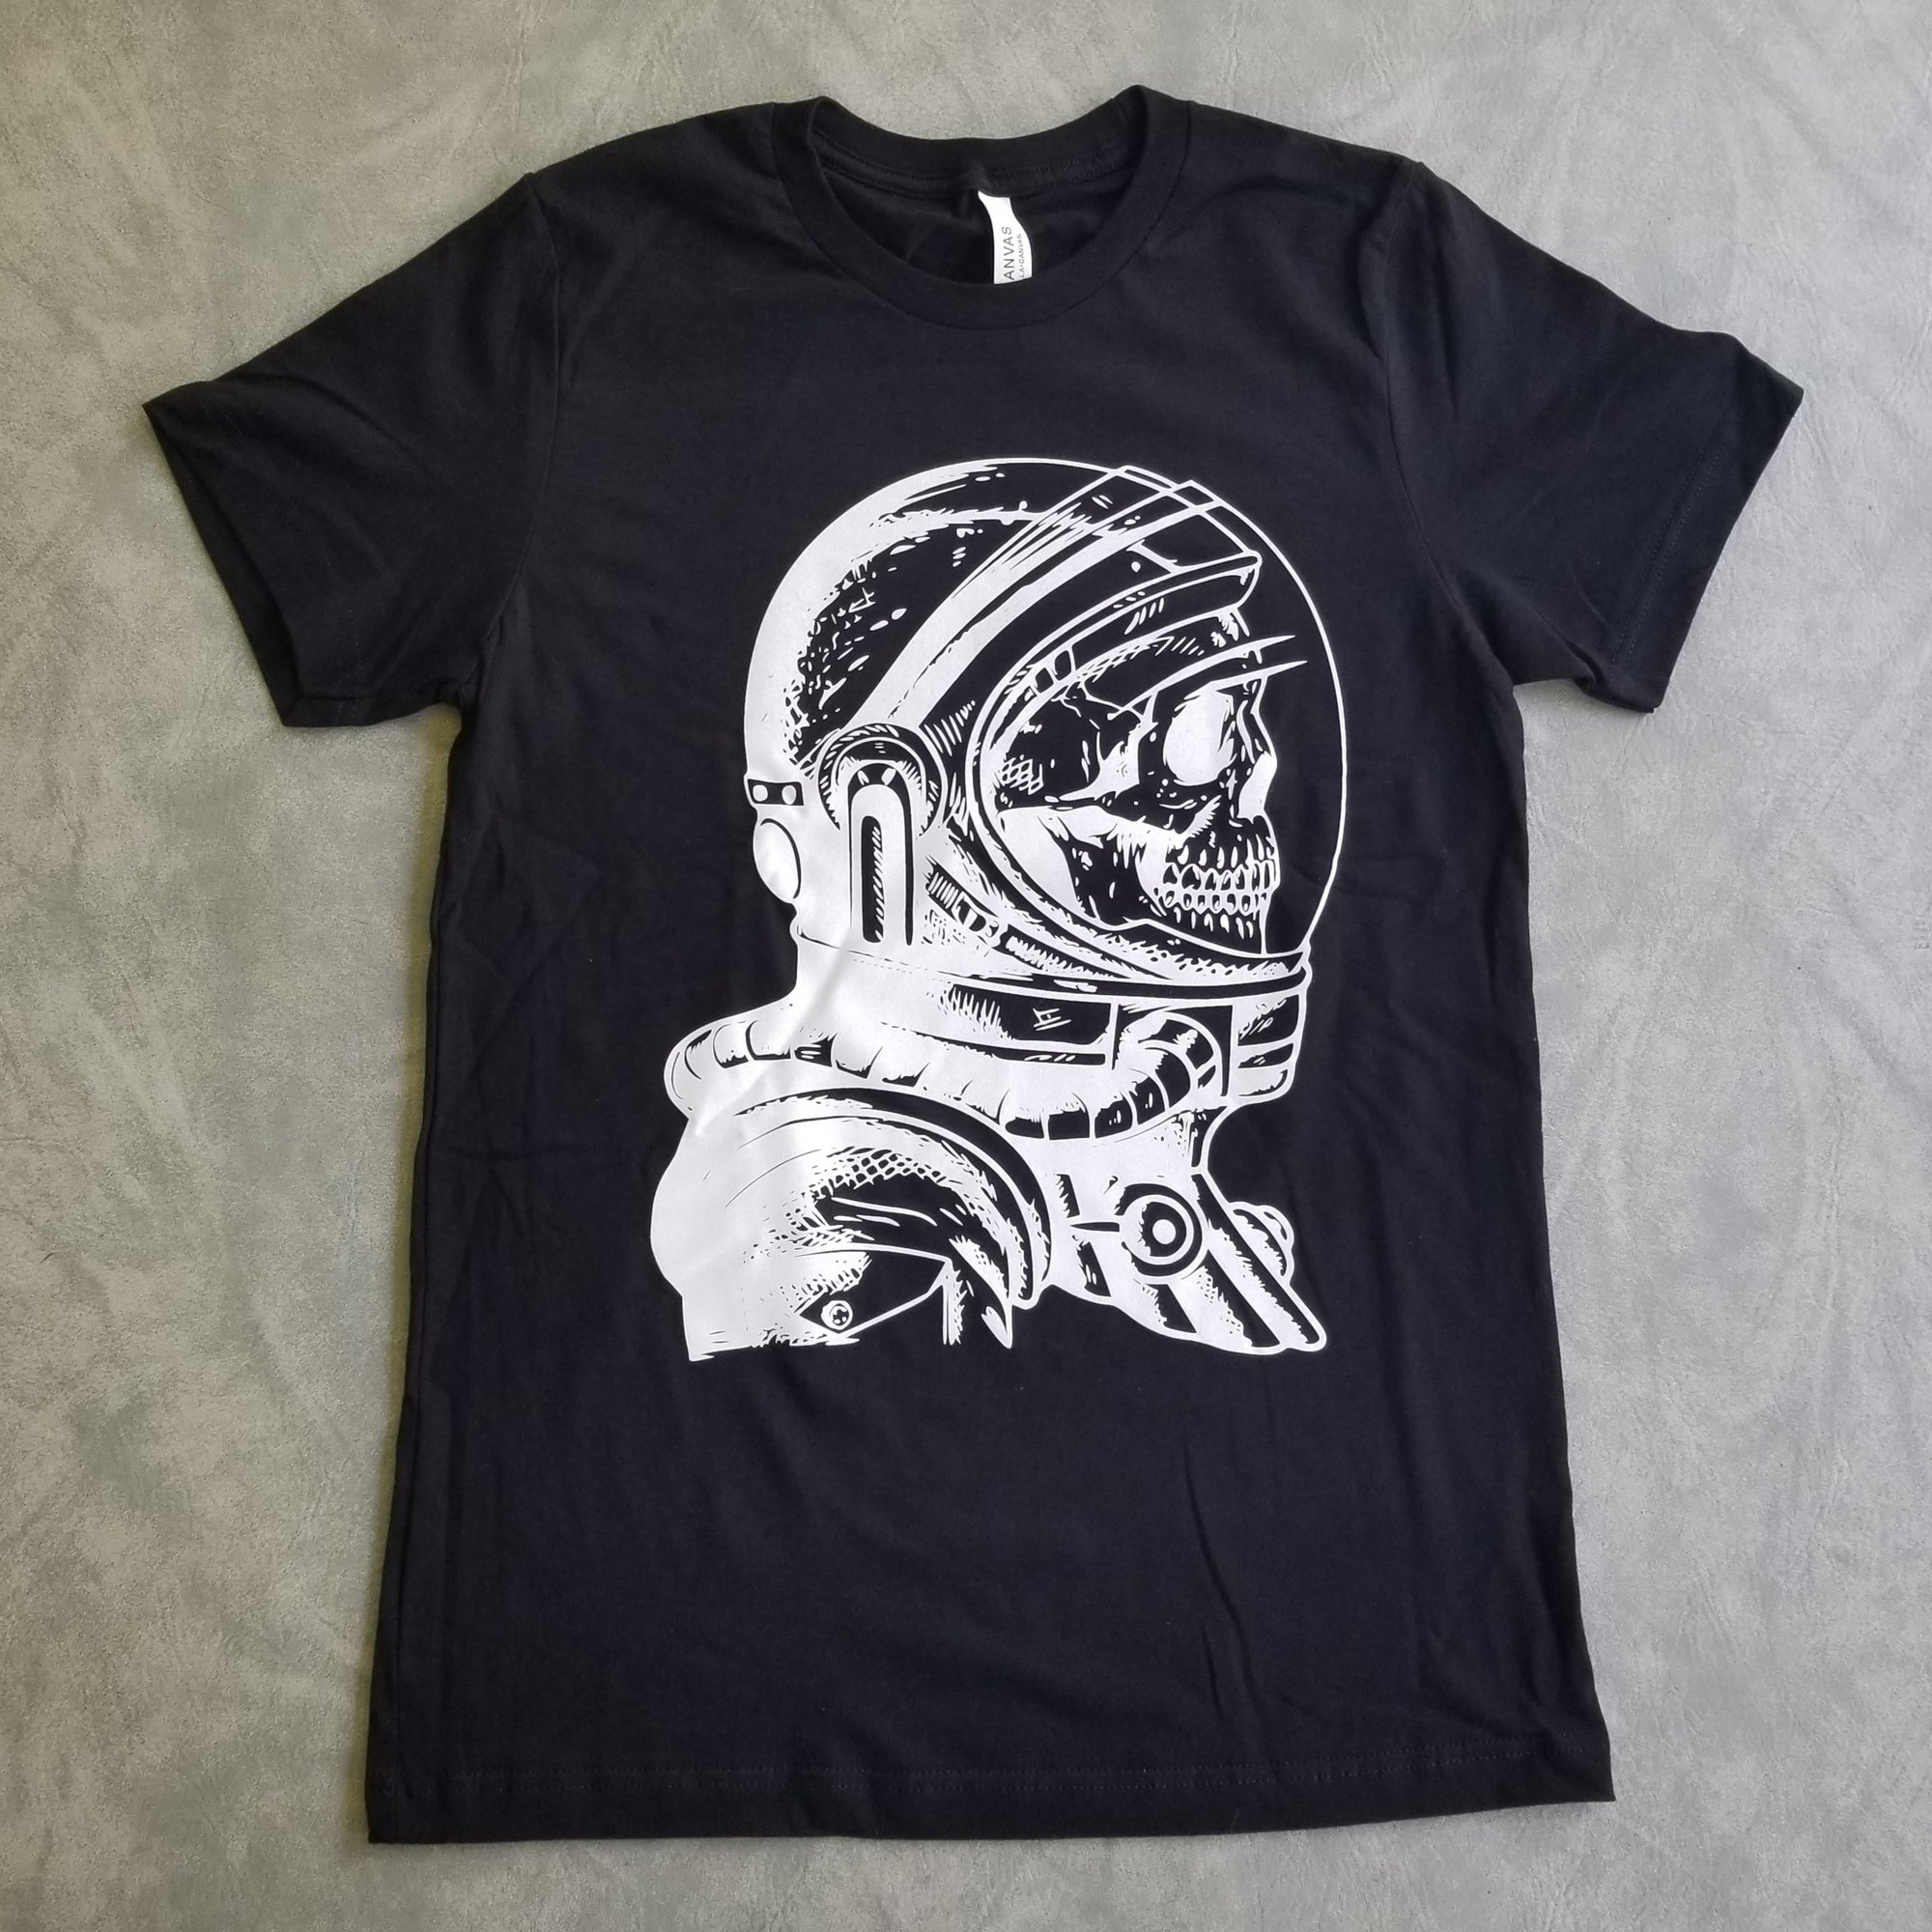 Undead Astronaut Space Man Skeleton Skull Zombie Universe Black Unisex Short Sleeve T Shirt